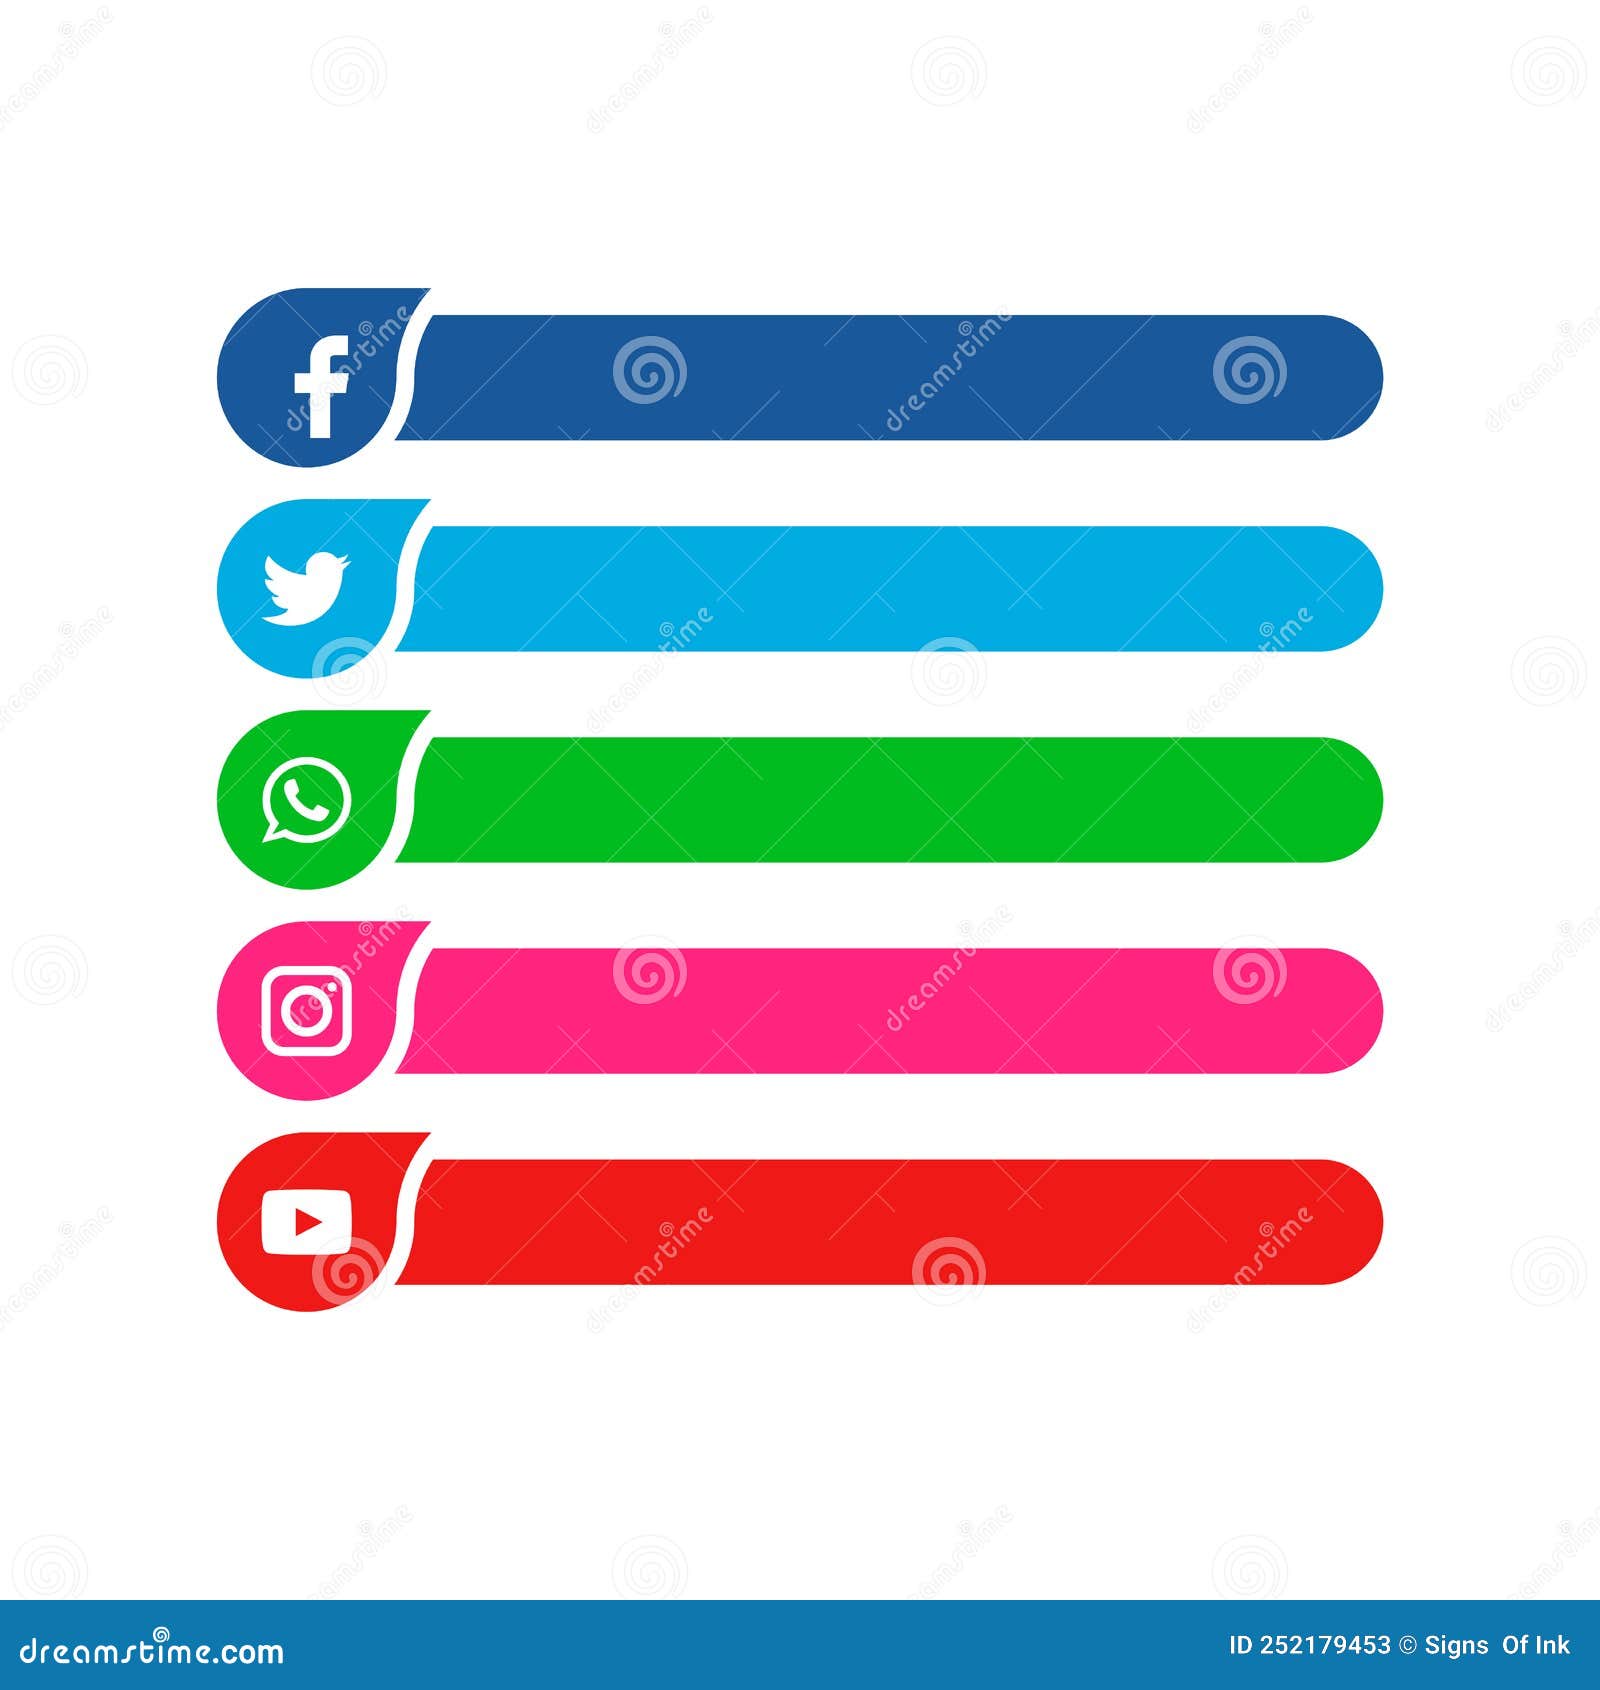 social media banner png